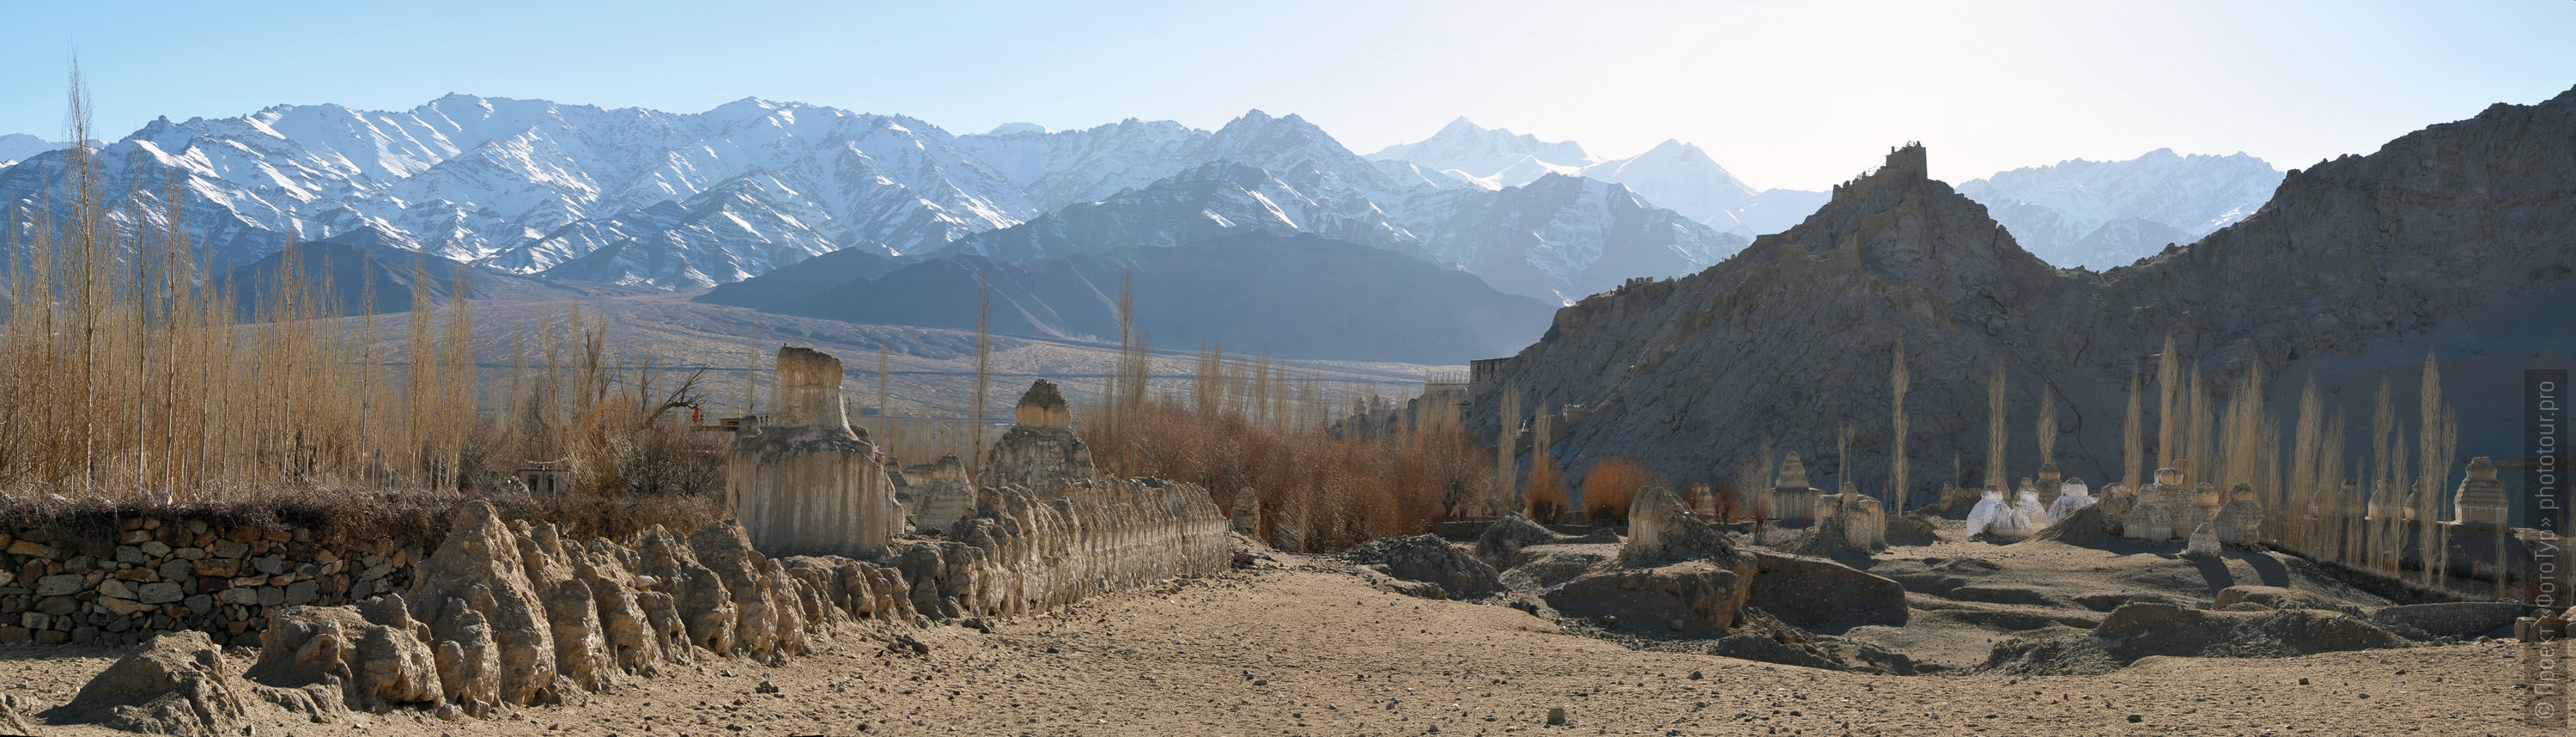 Ladakh landscape. Photo tour to Tibet for the Winter Mysteries in Ladakh, Stok and Matho monasteries, 01.03. - 03/10/2020